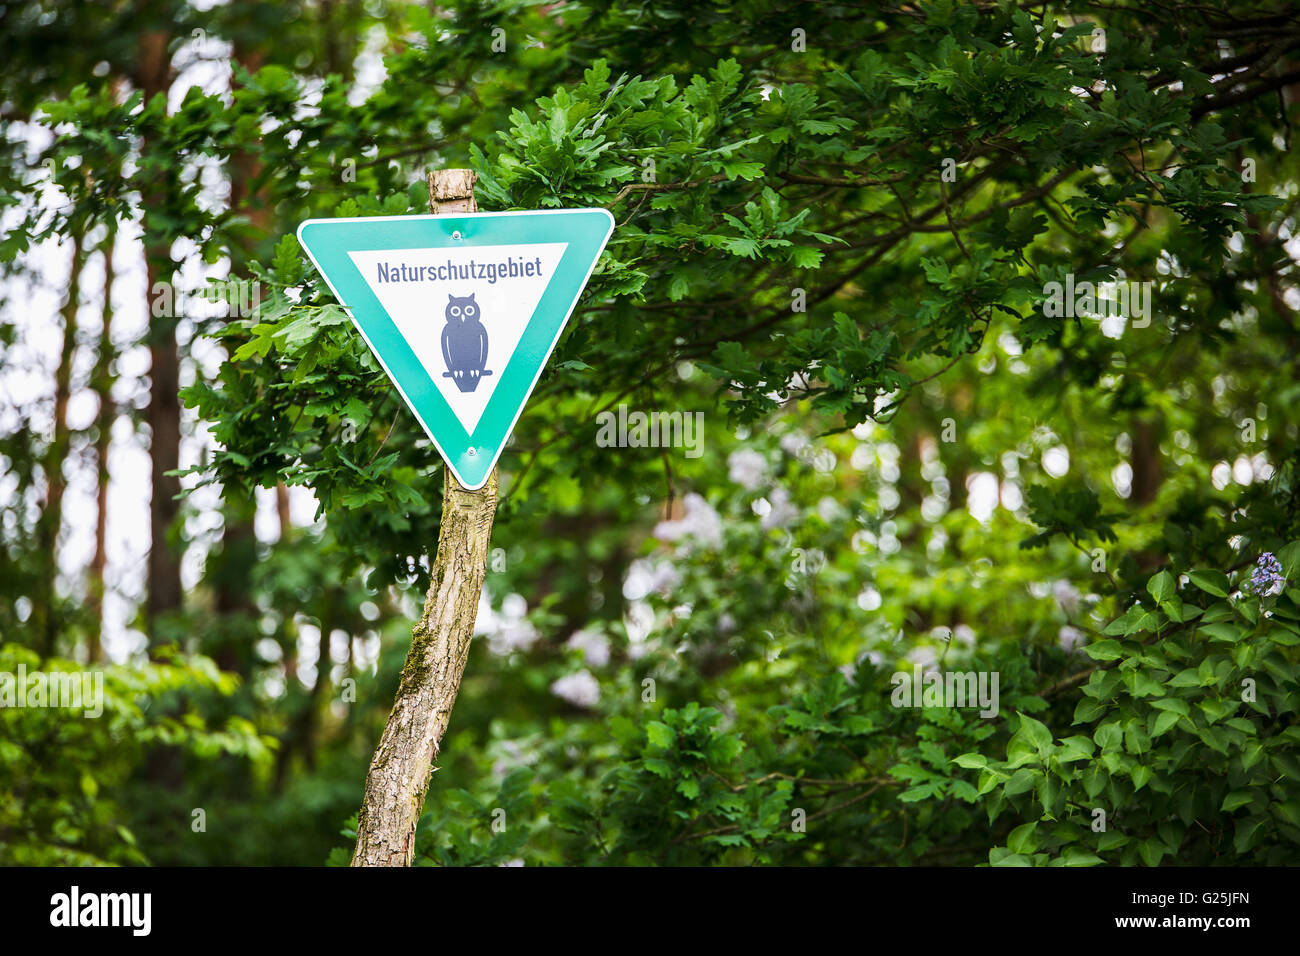 nature reserve sign indicating label german naturschutzgebiet Stock Photo